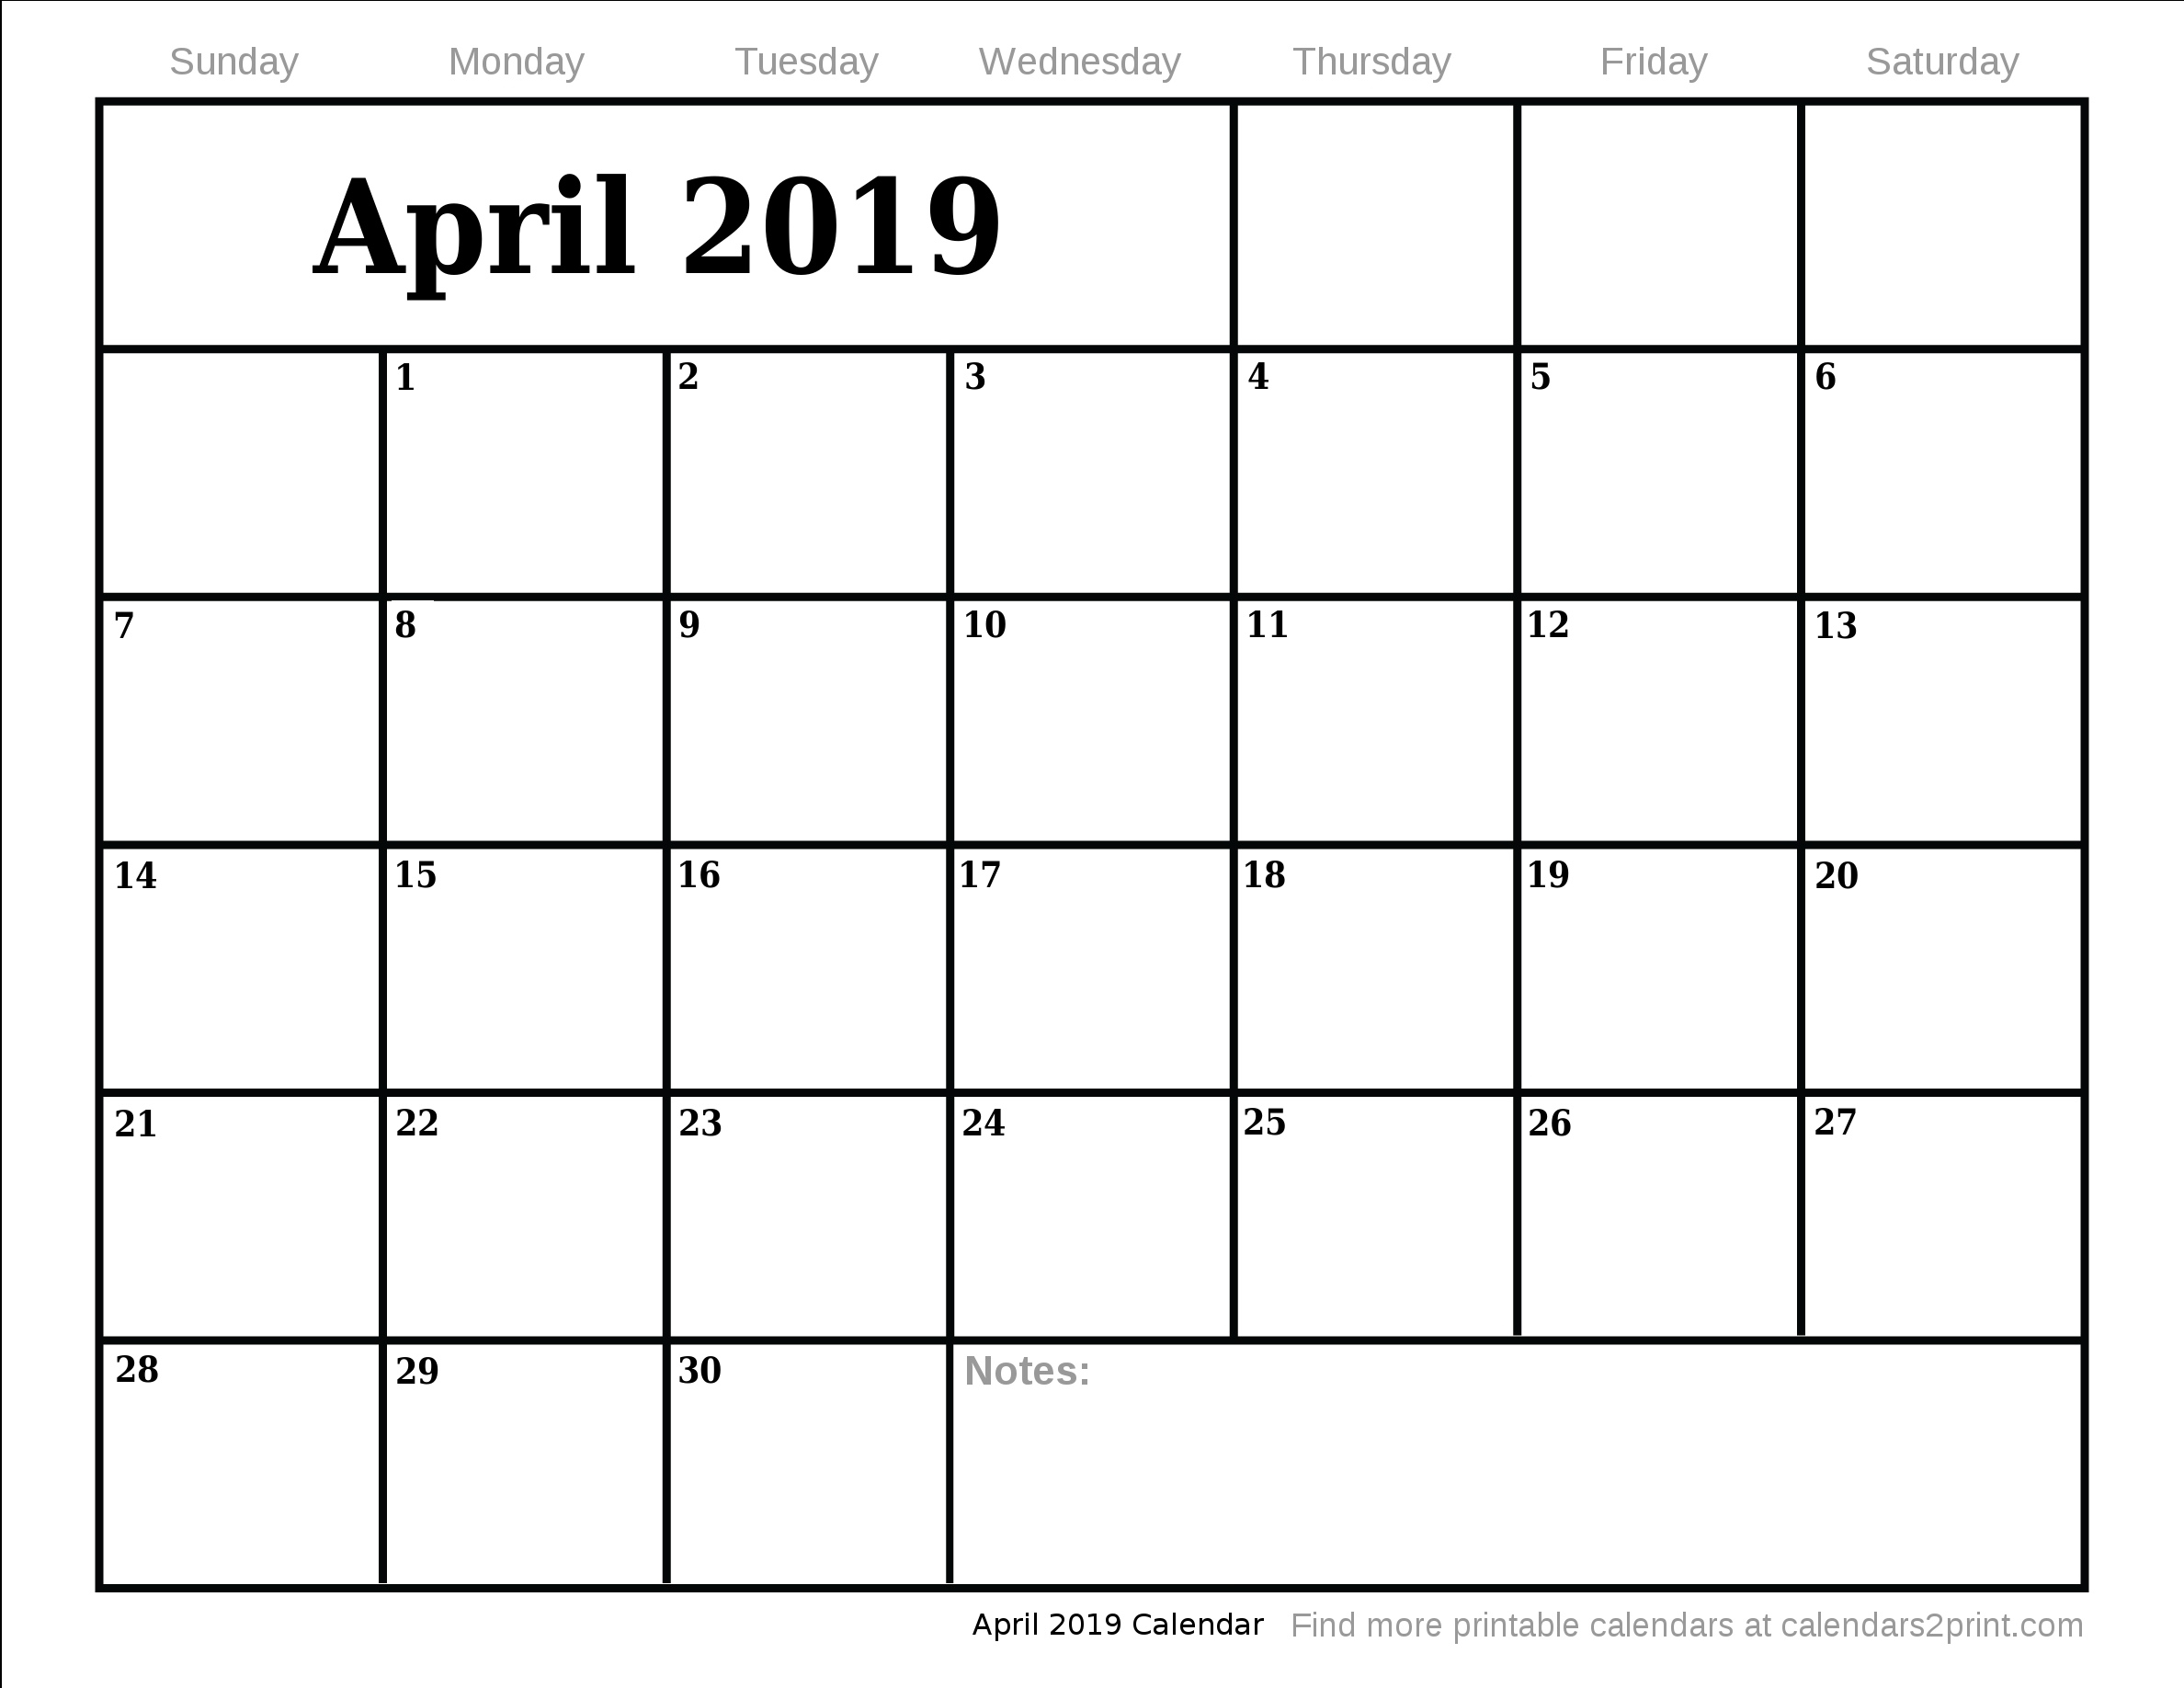 Apr 2019 Printable Calendar